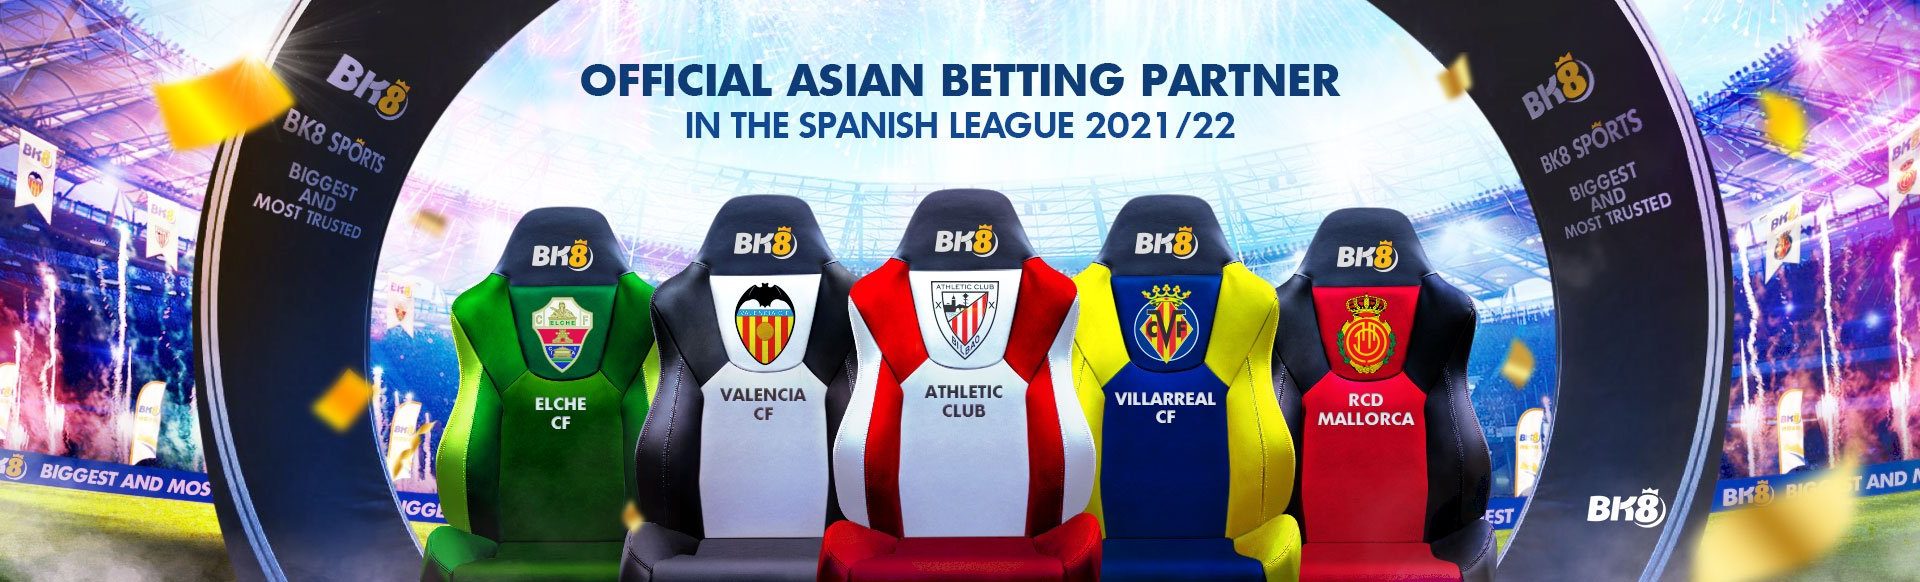 Spanish League Asian Betting Partner - BK8